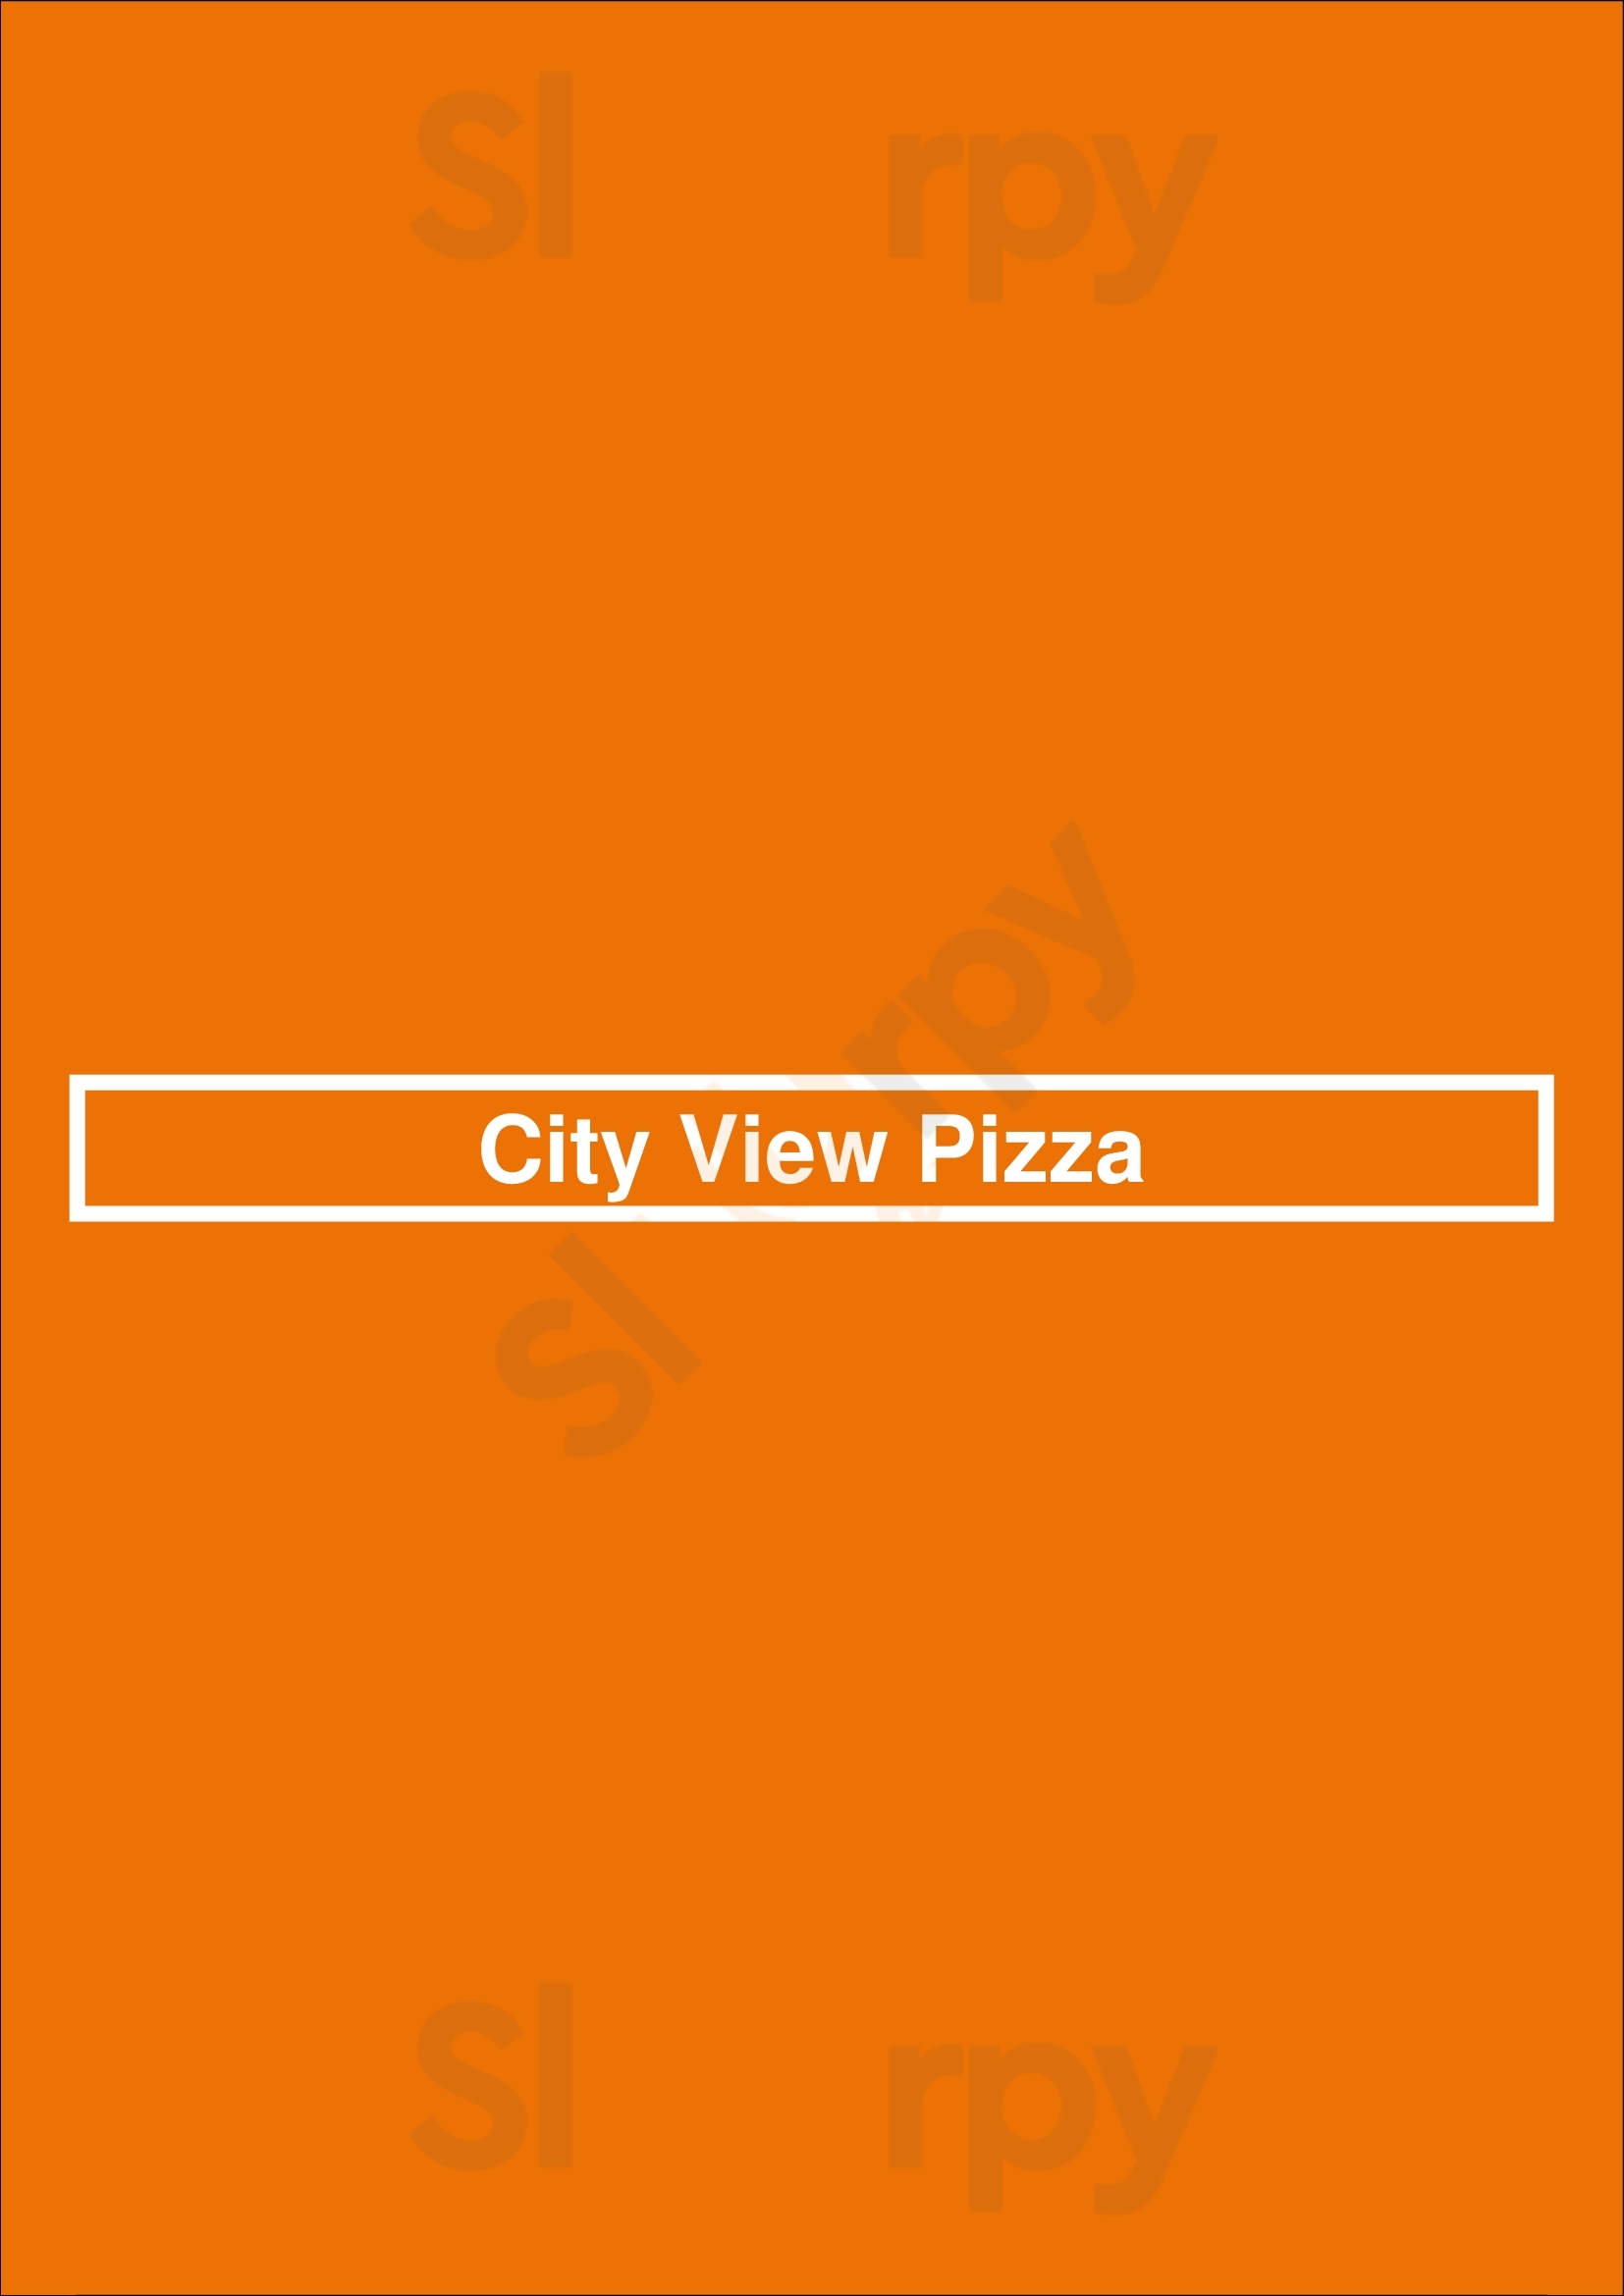 City View Pizza Philadelphia Menu - 1